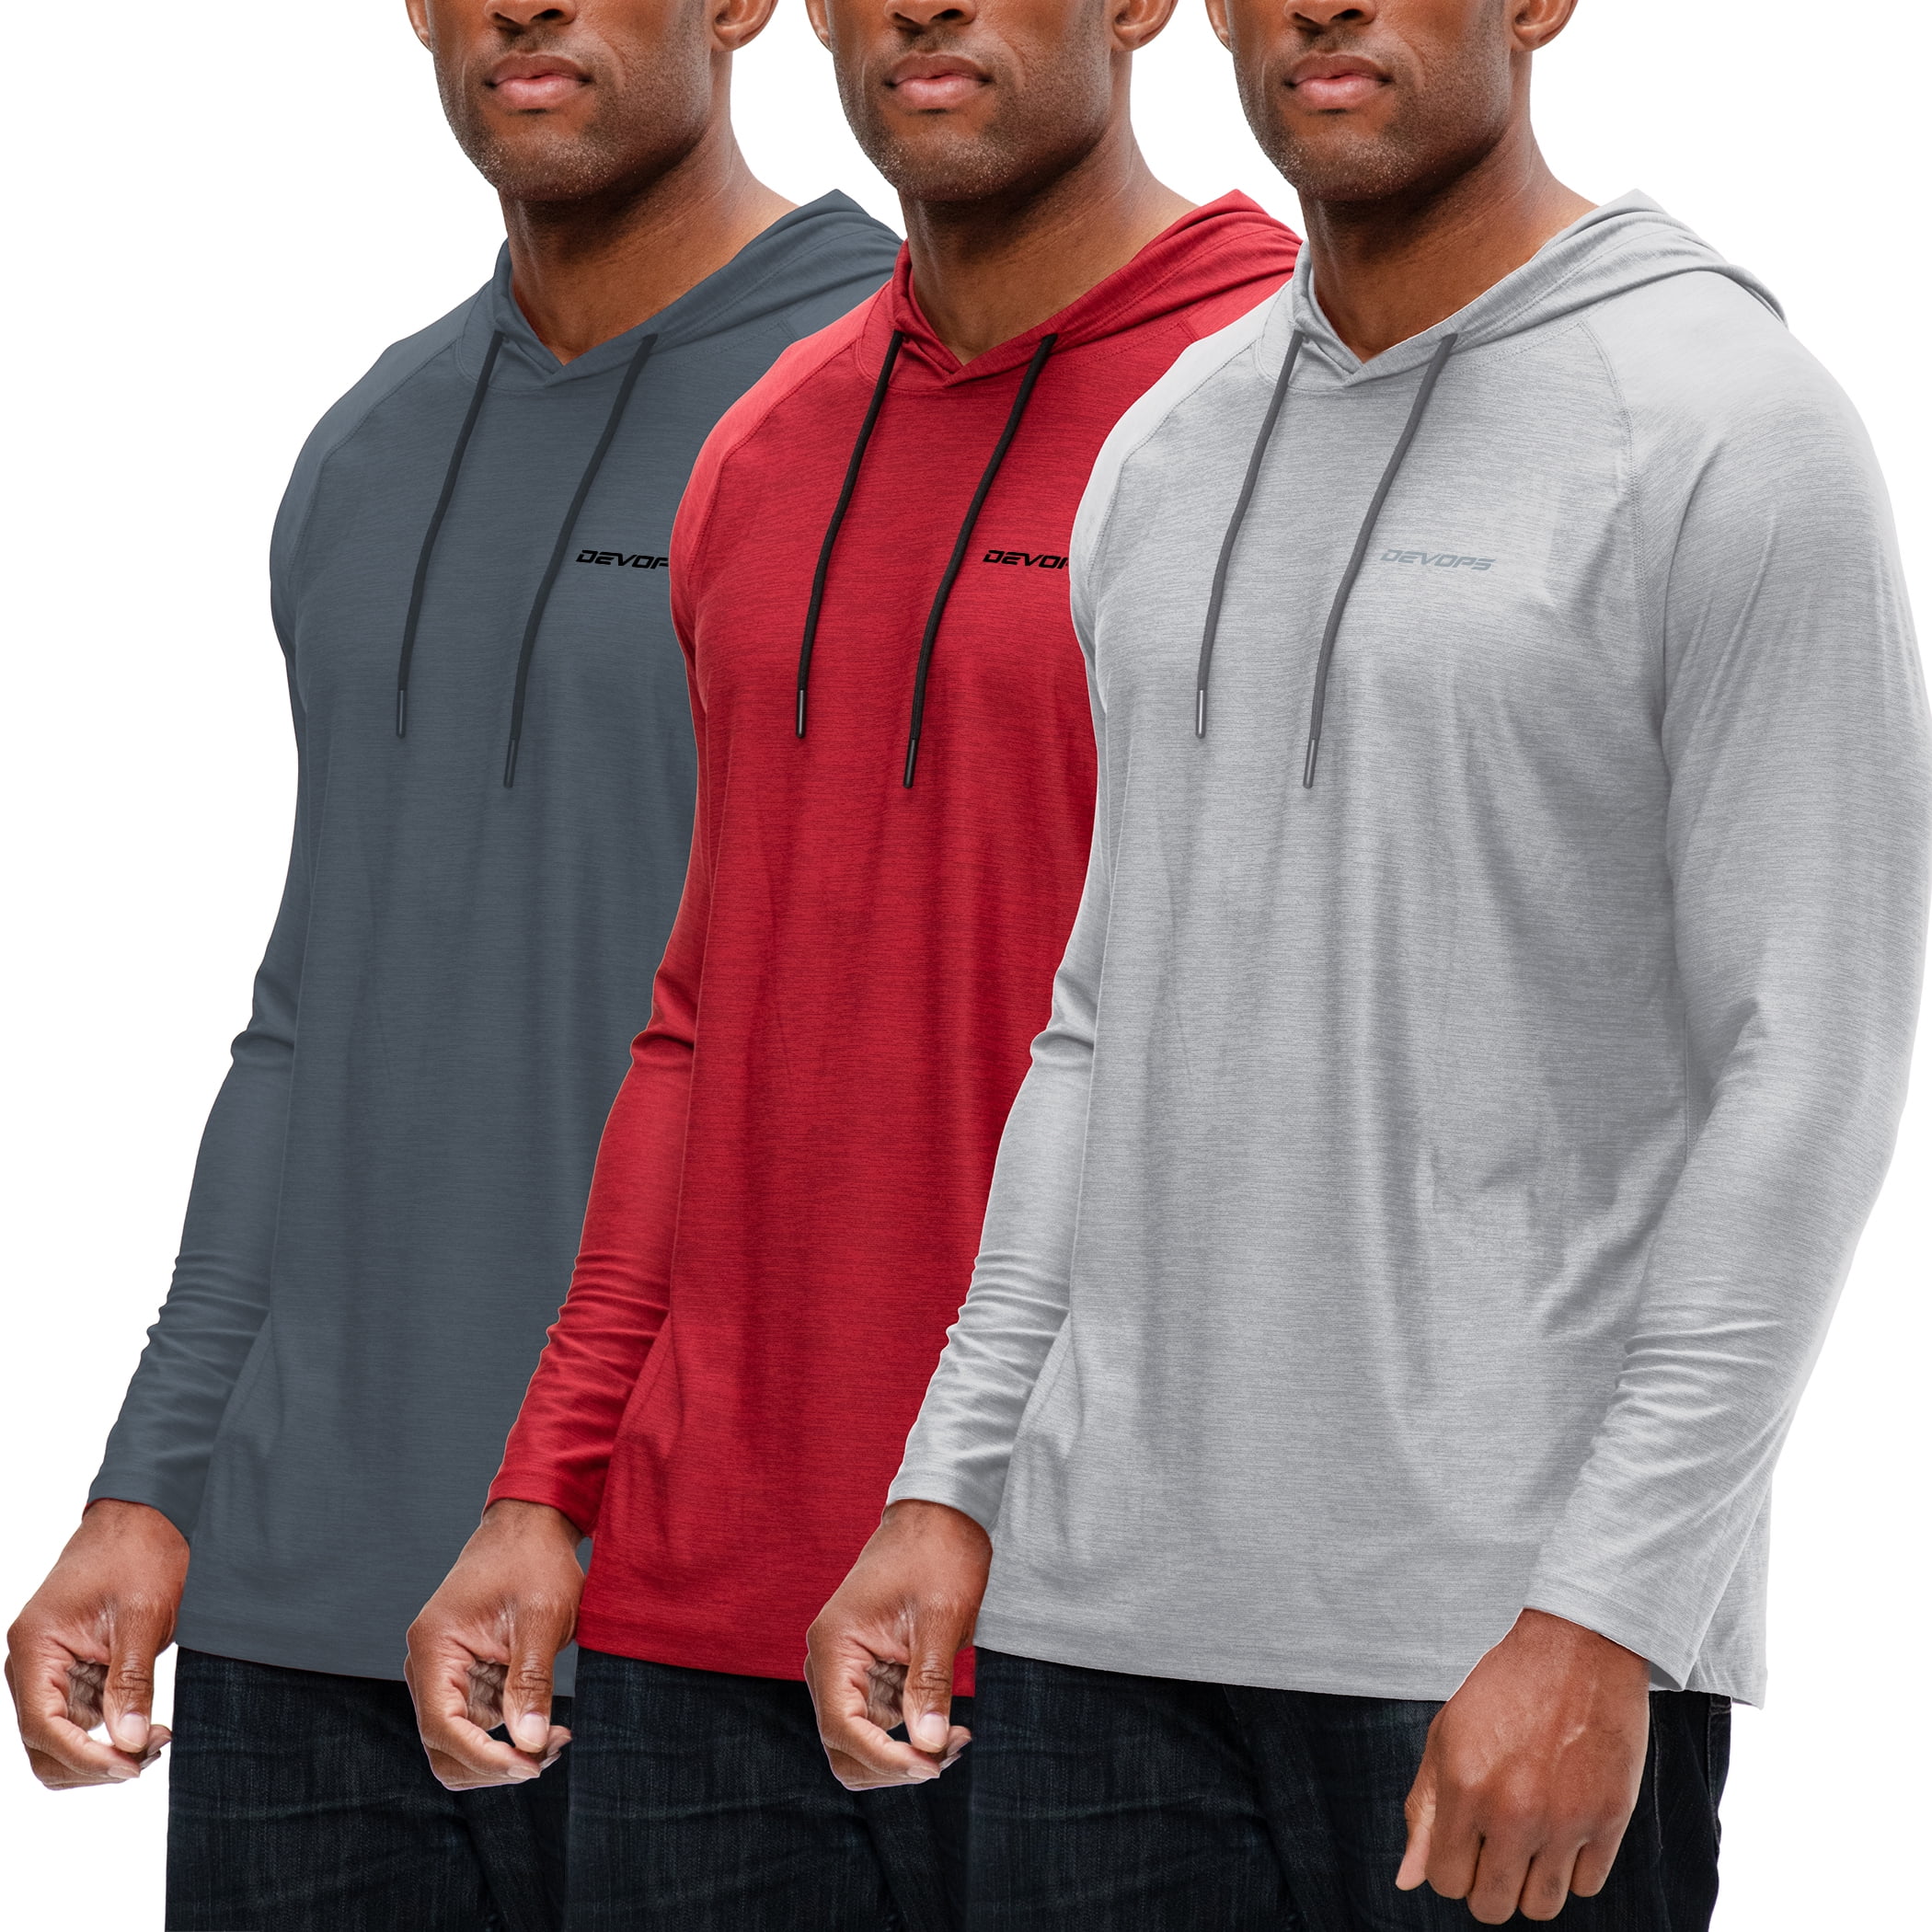 DEVOPS 3 Pack Men's Hoodie Long Sleeve Fishing Hiking Running Workout  T-shirts (Medium, Black/Navy/Gray)